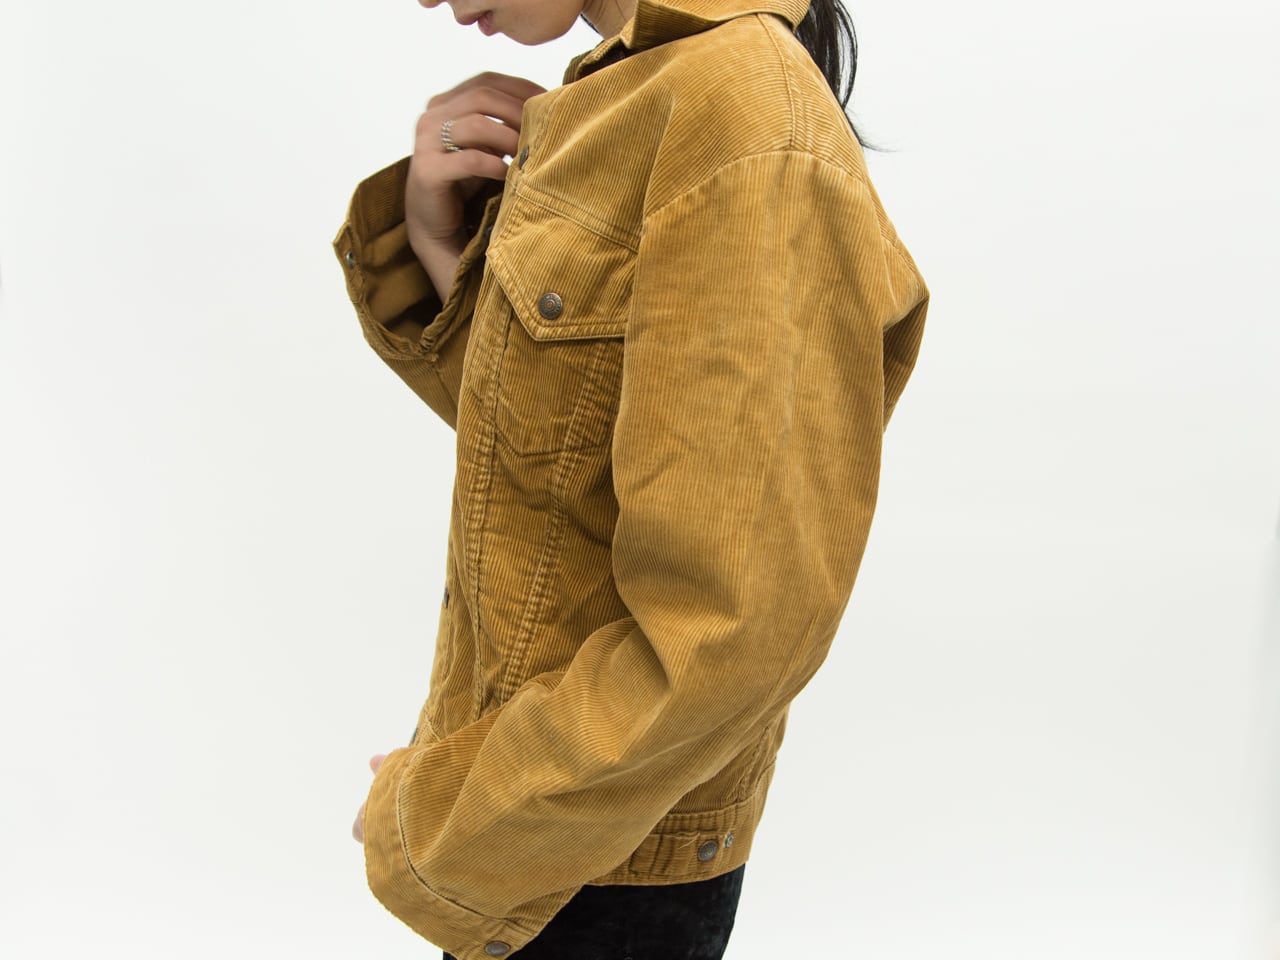 【Levi's】Made in U.S.A corduroy jacket （リーバイス コーデュロイジャケット）1c